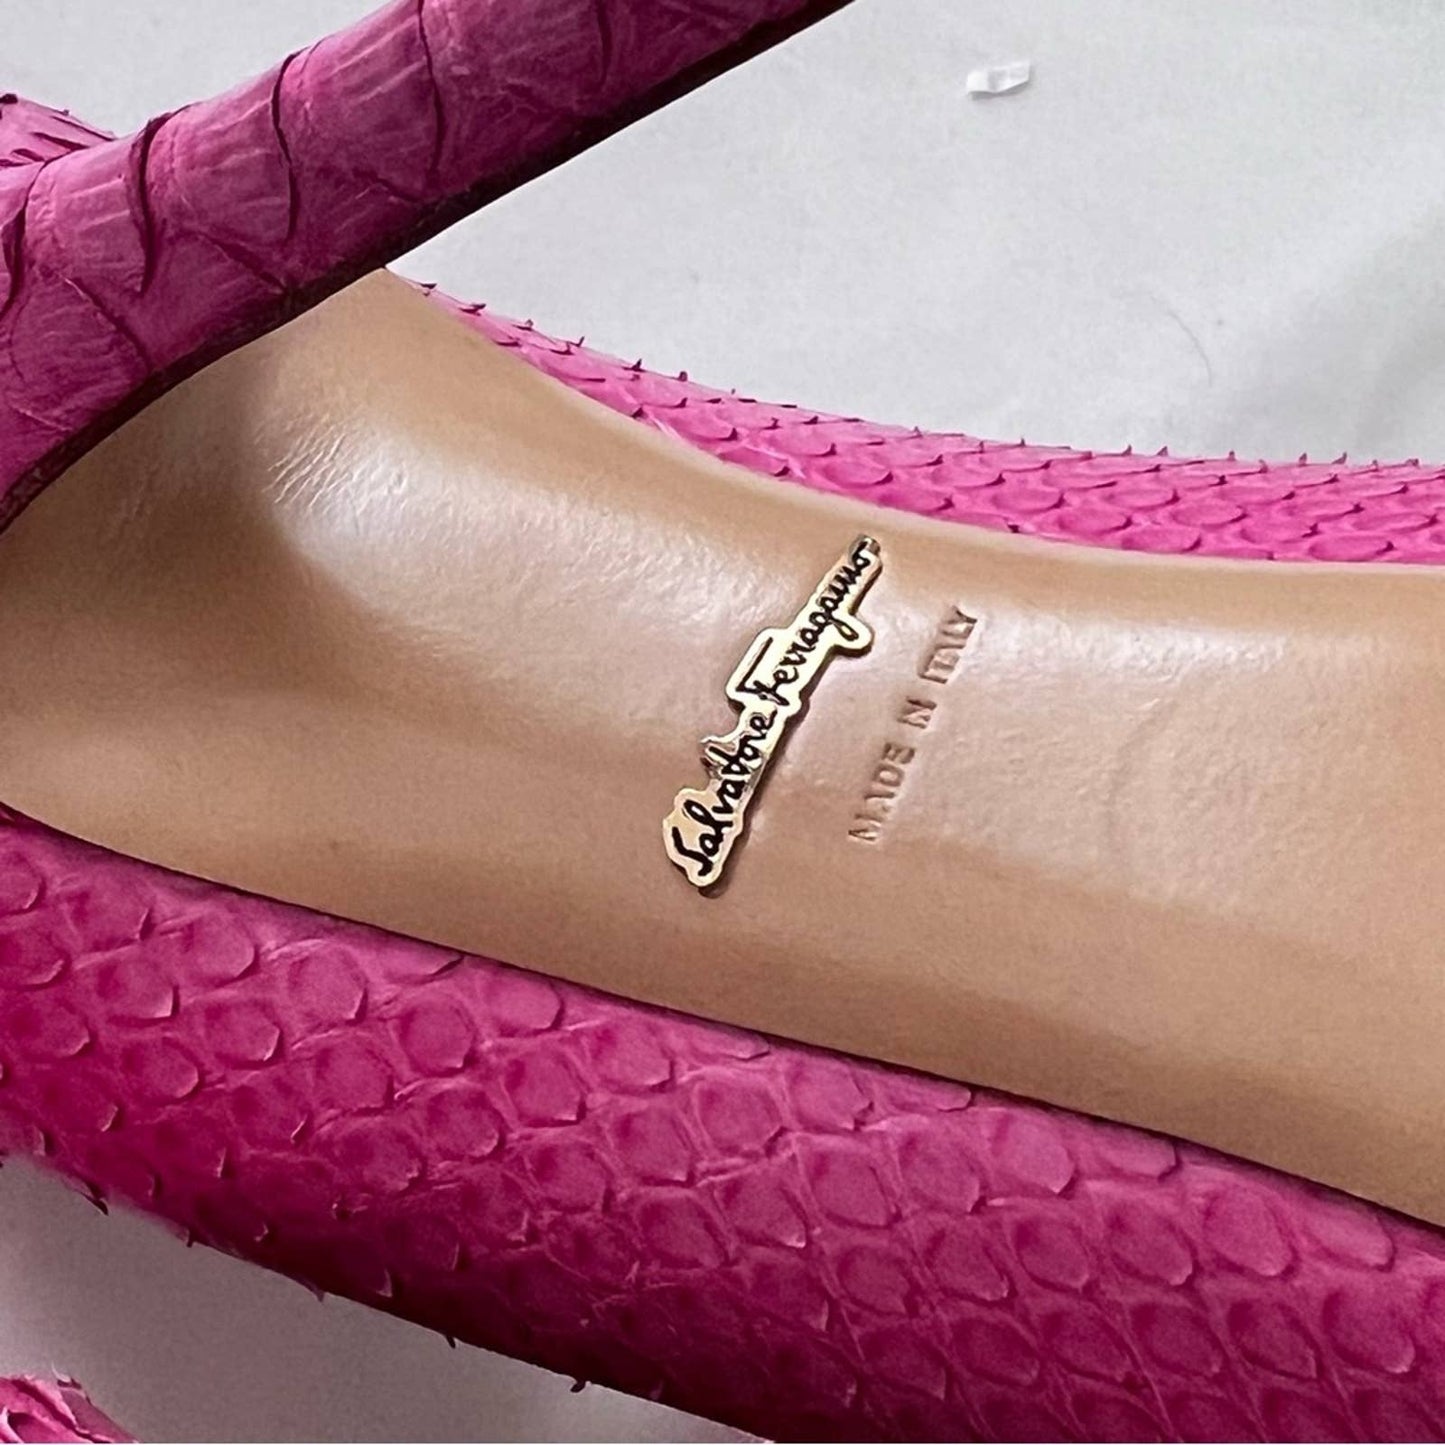 Salvatore Ferragamo Pink Snakeskin Leather Heels 7